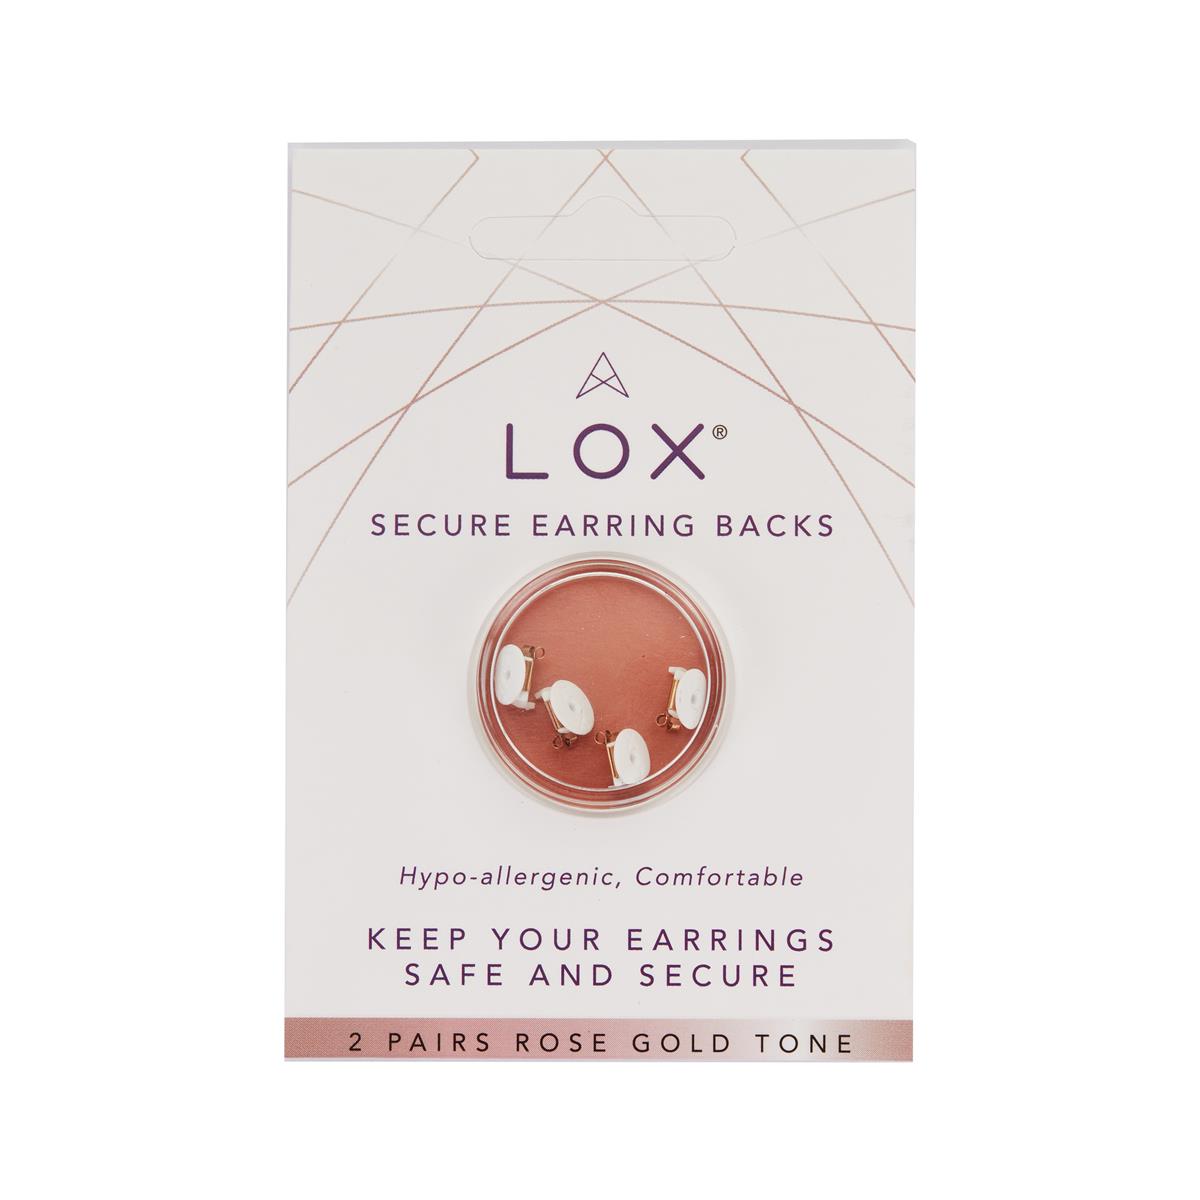 Lox locking and lifting earrings backs - YouTube